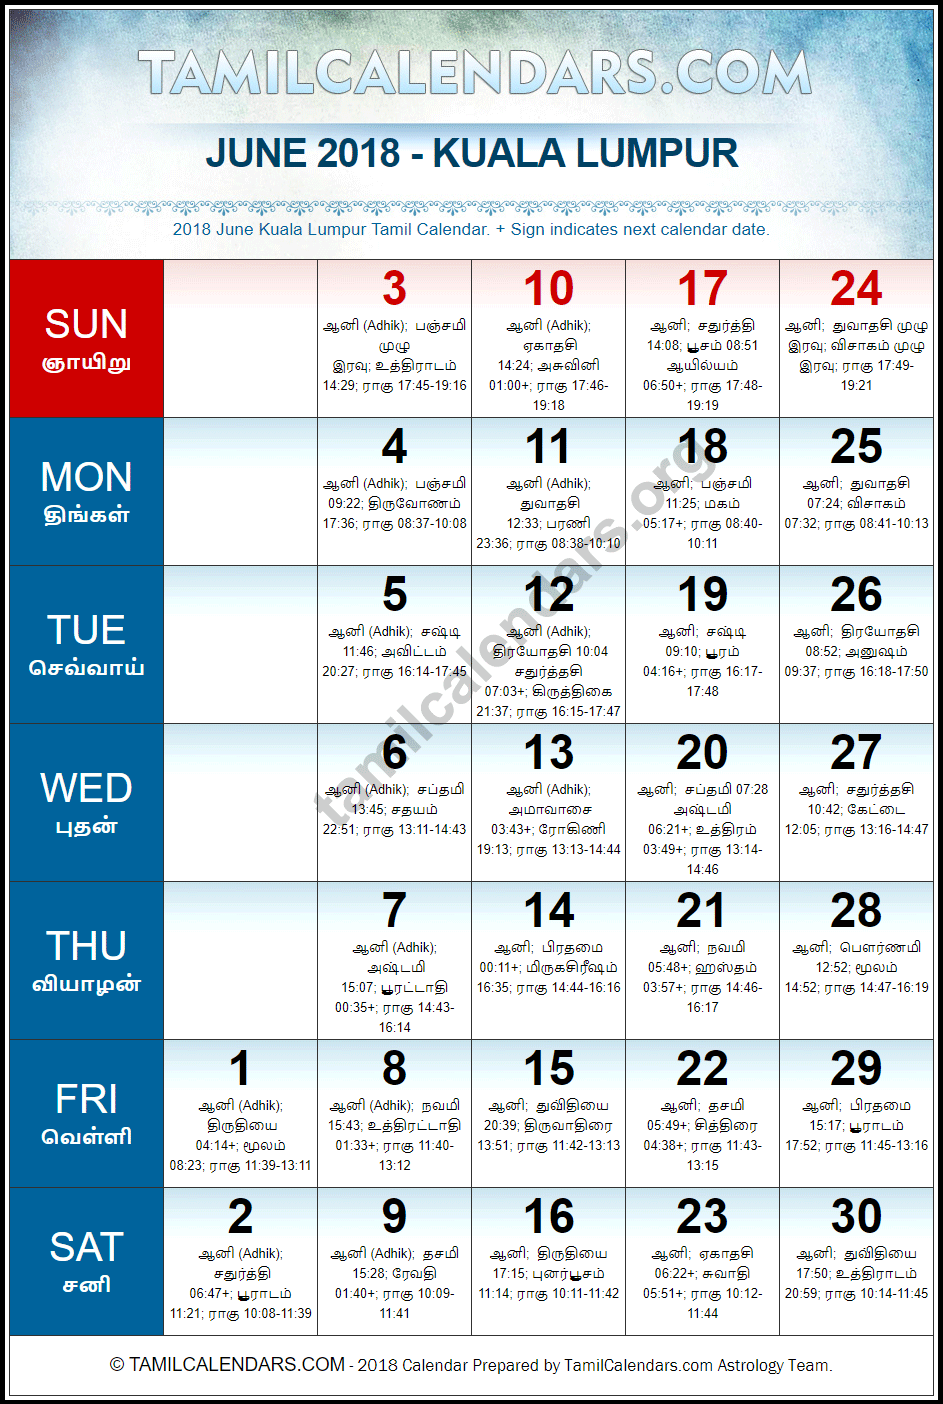 June 2018 Tamil Calendar for Malaysia (Kuala Lumpur)